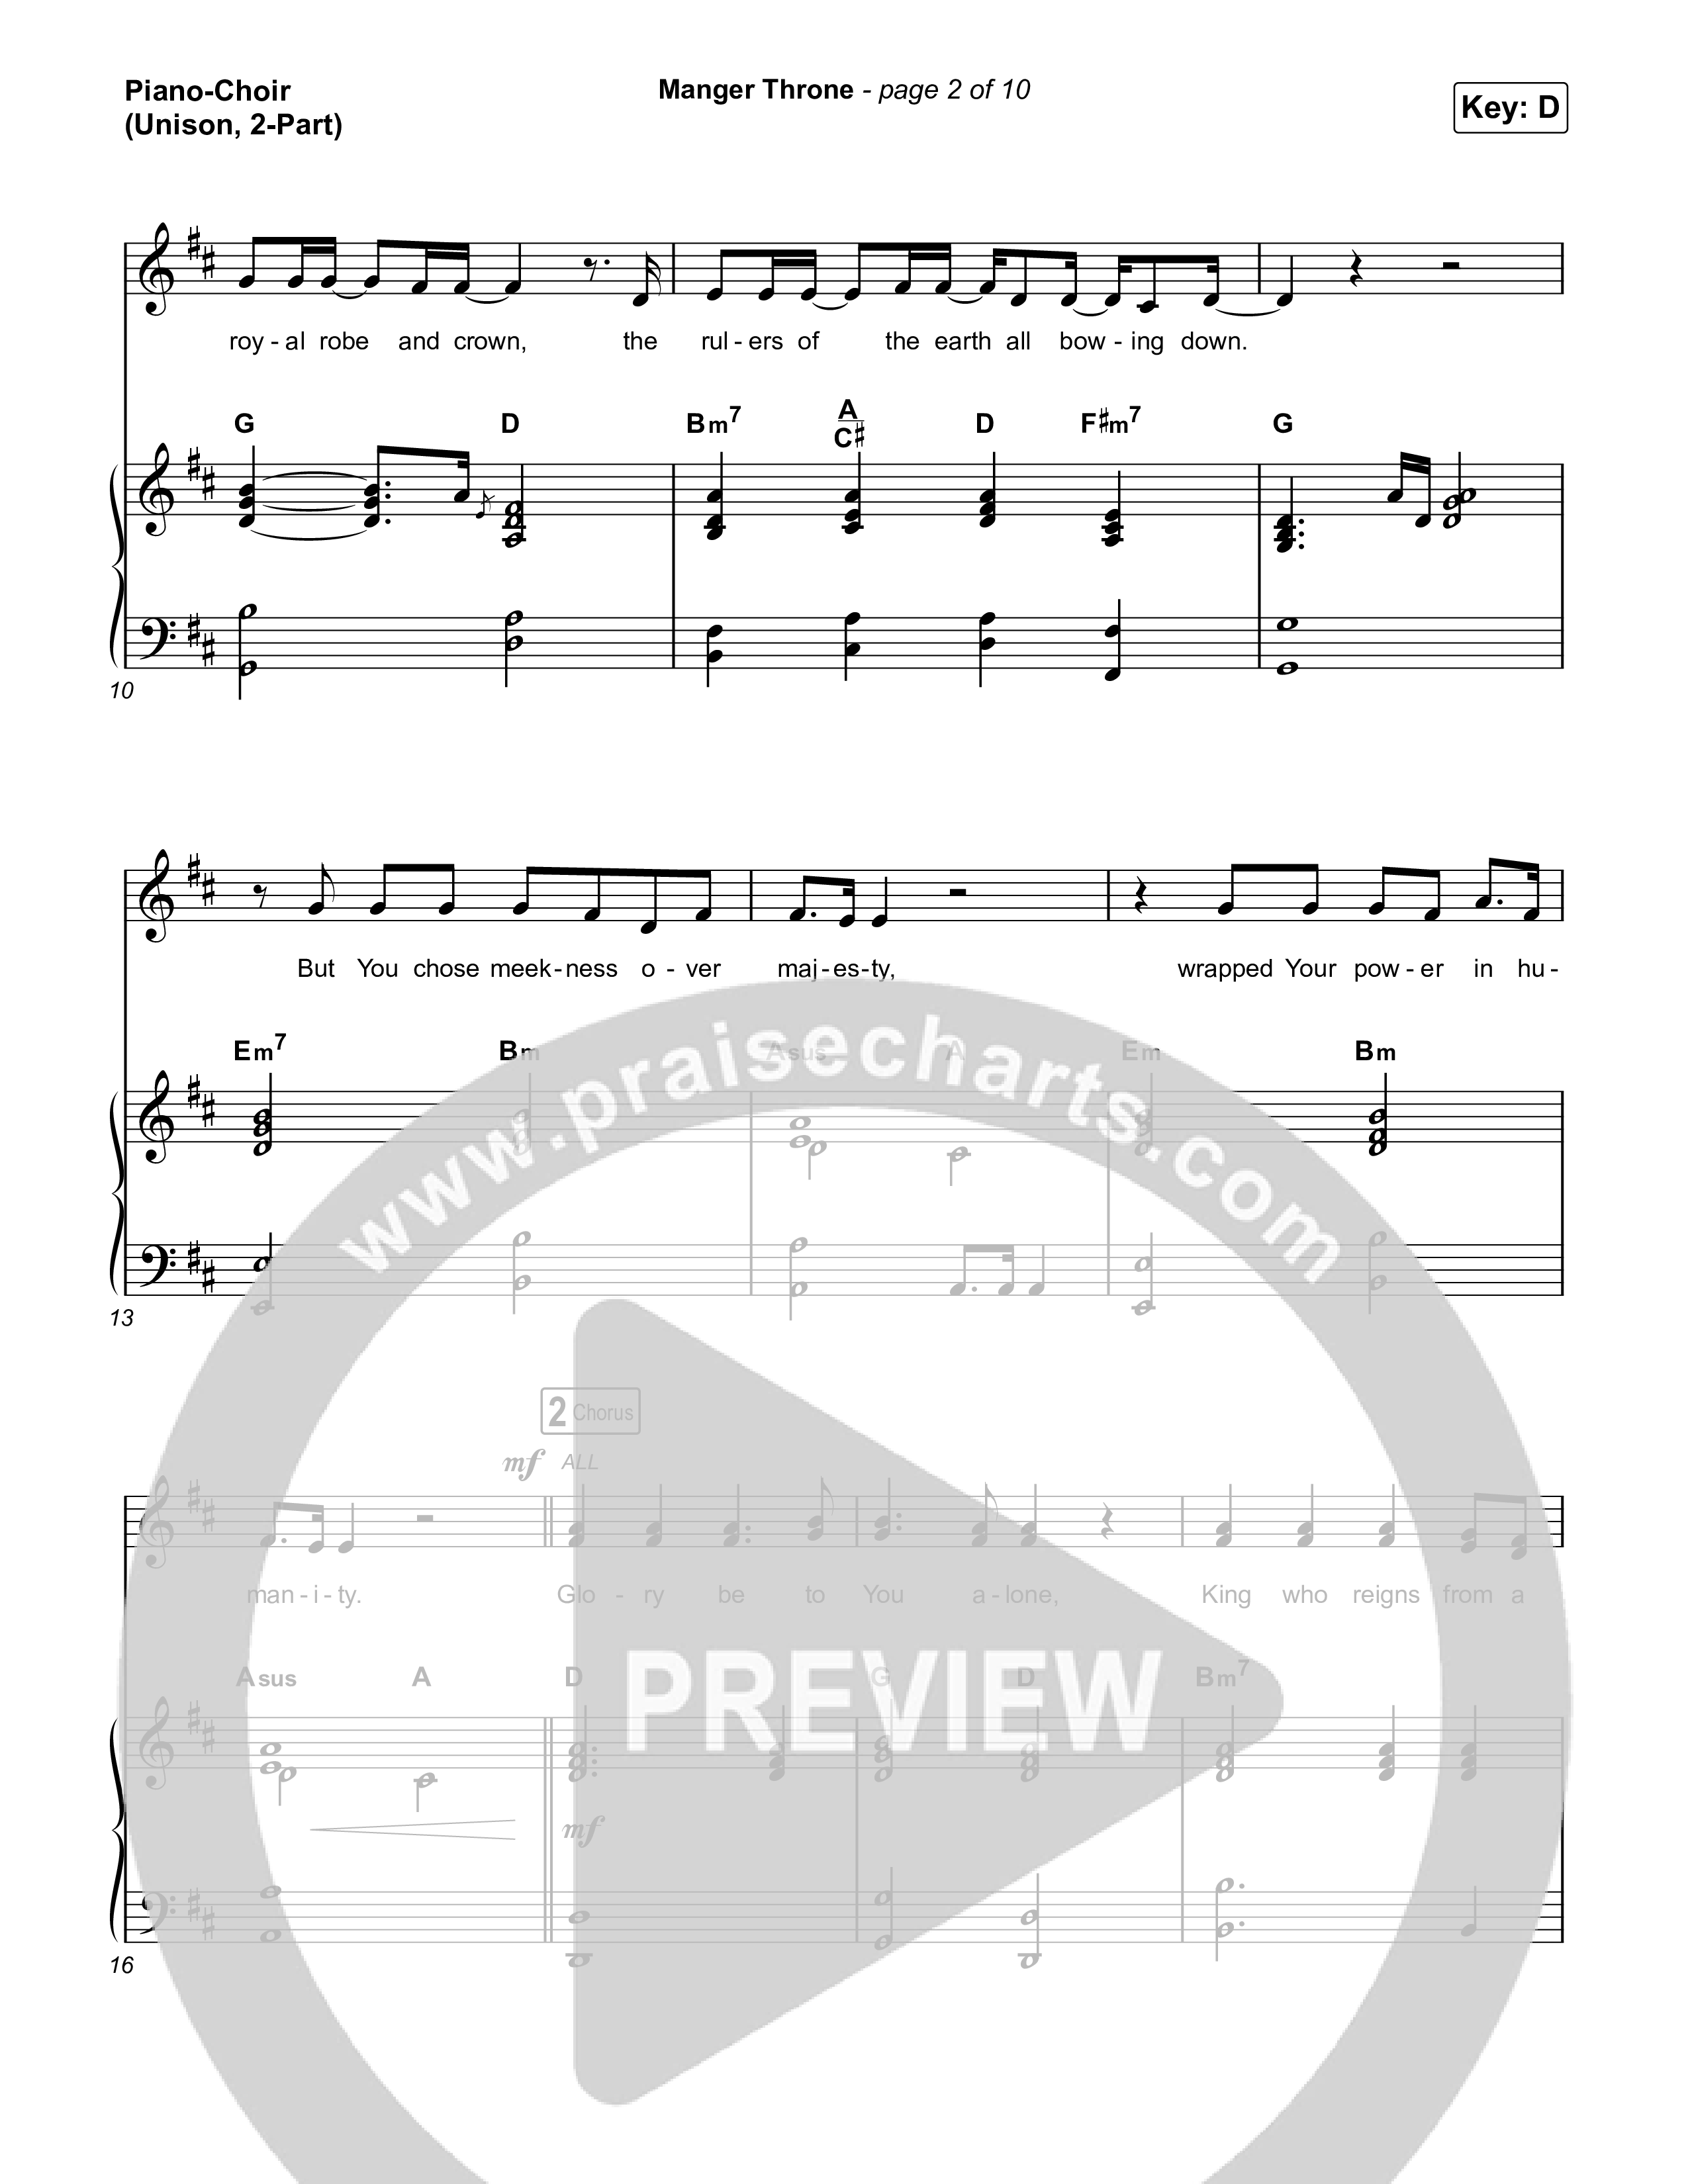 Manger Throne (Unison/2-Part) Piano/Choir  (Uni/2-Part) (Phil Wickham / Arr. Erik Foster)